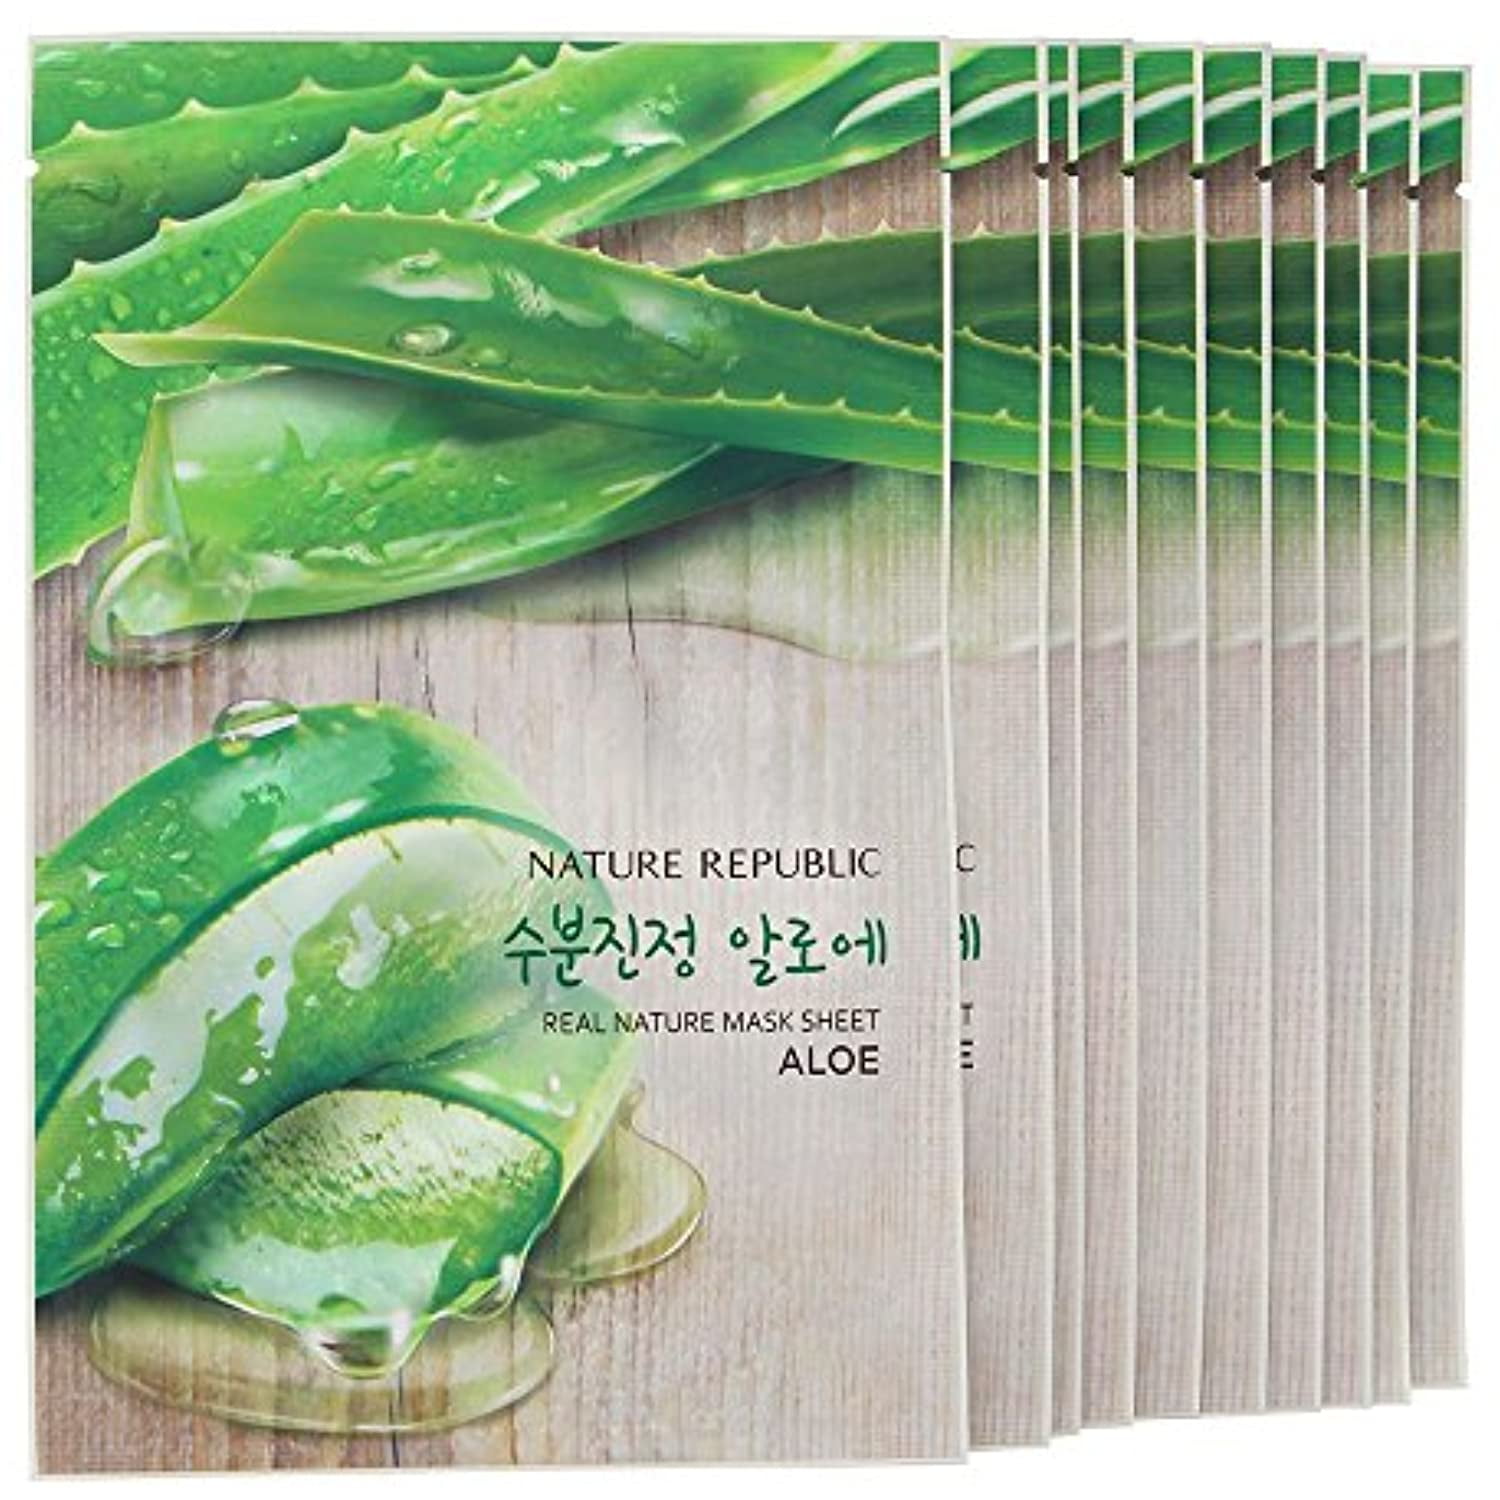 Nature Real Nature Mask Sheet 10pcs Original Korean Sheet Walmart.com